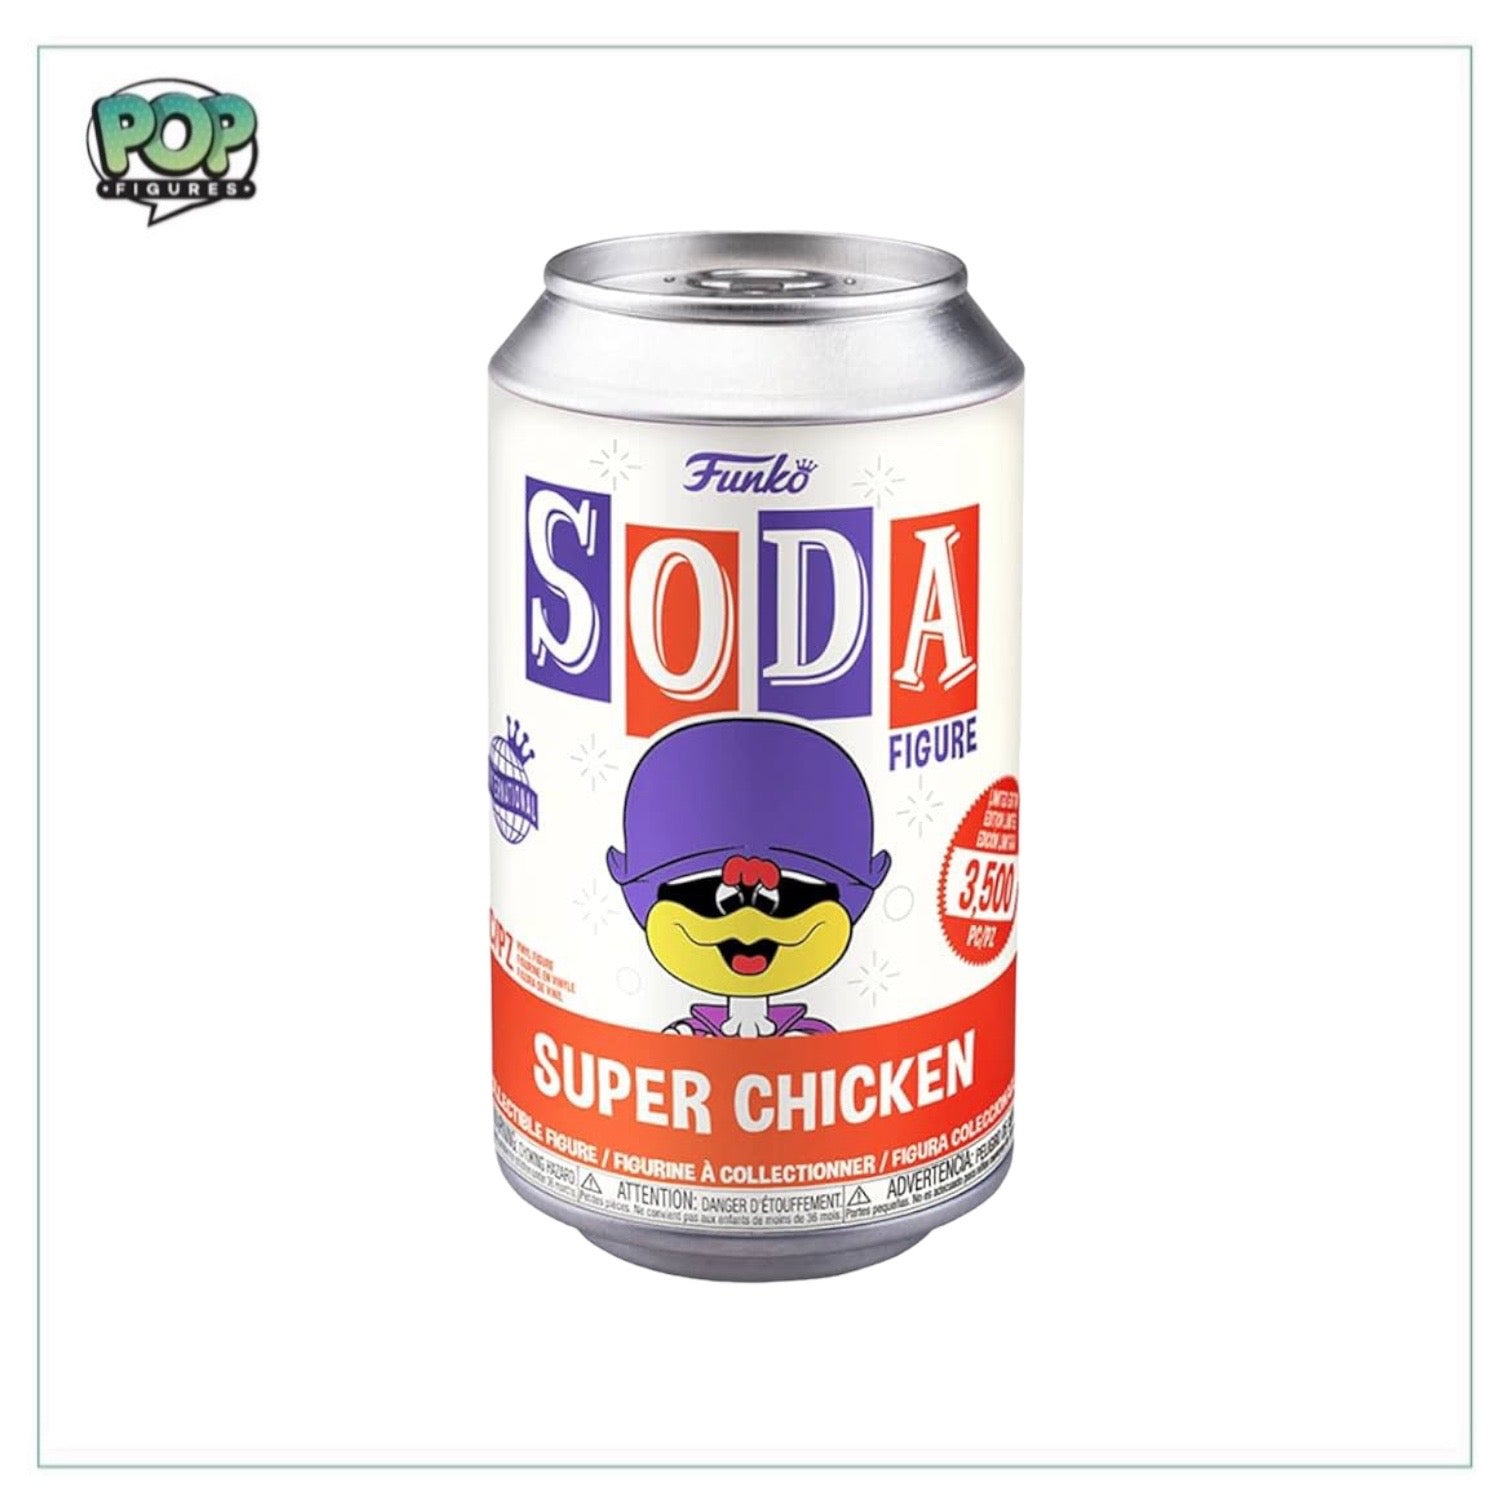 Super Chicken Funko Soda Vinyl Figure! - Super Chicken - International LE3500 Pcs - Chance of Chase